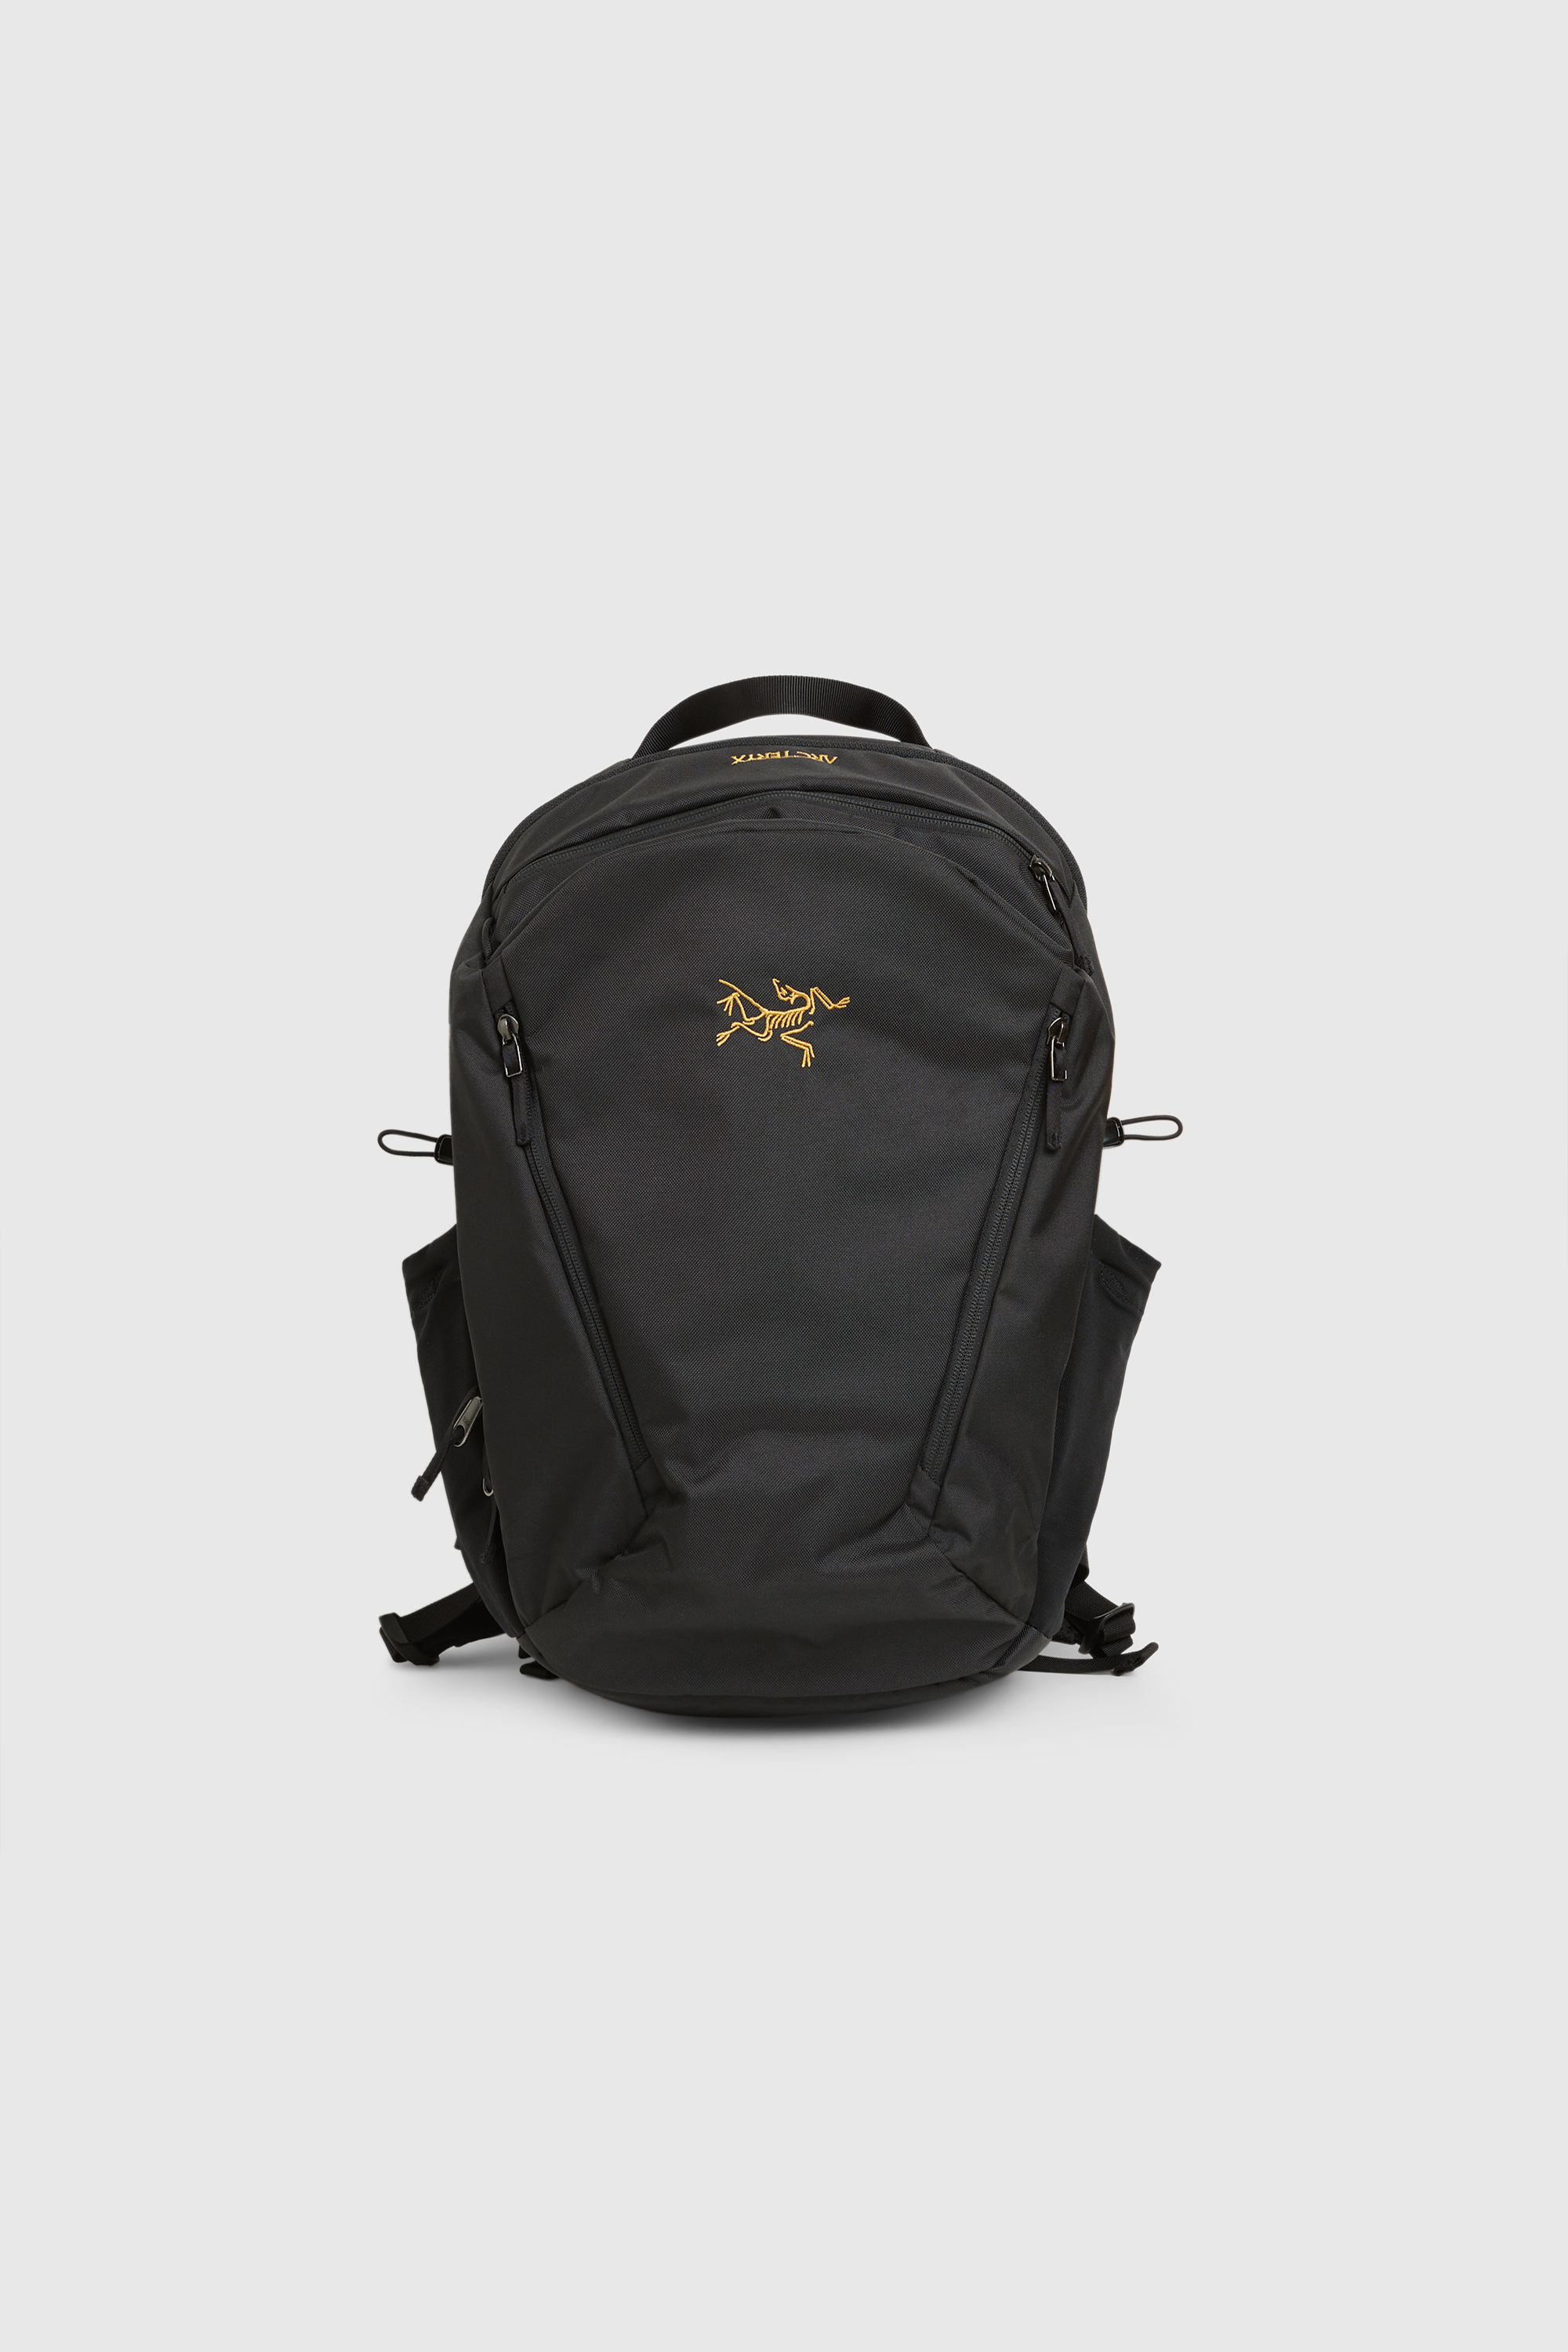 ARC'TERYX Mantis 26 Backpack Black | WoodWood.com